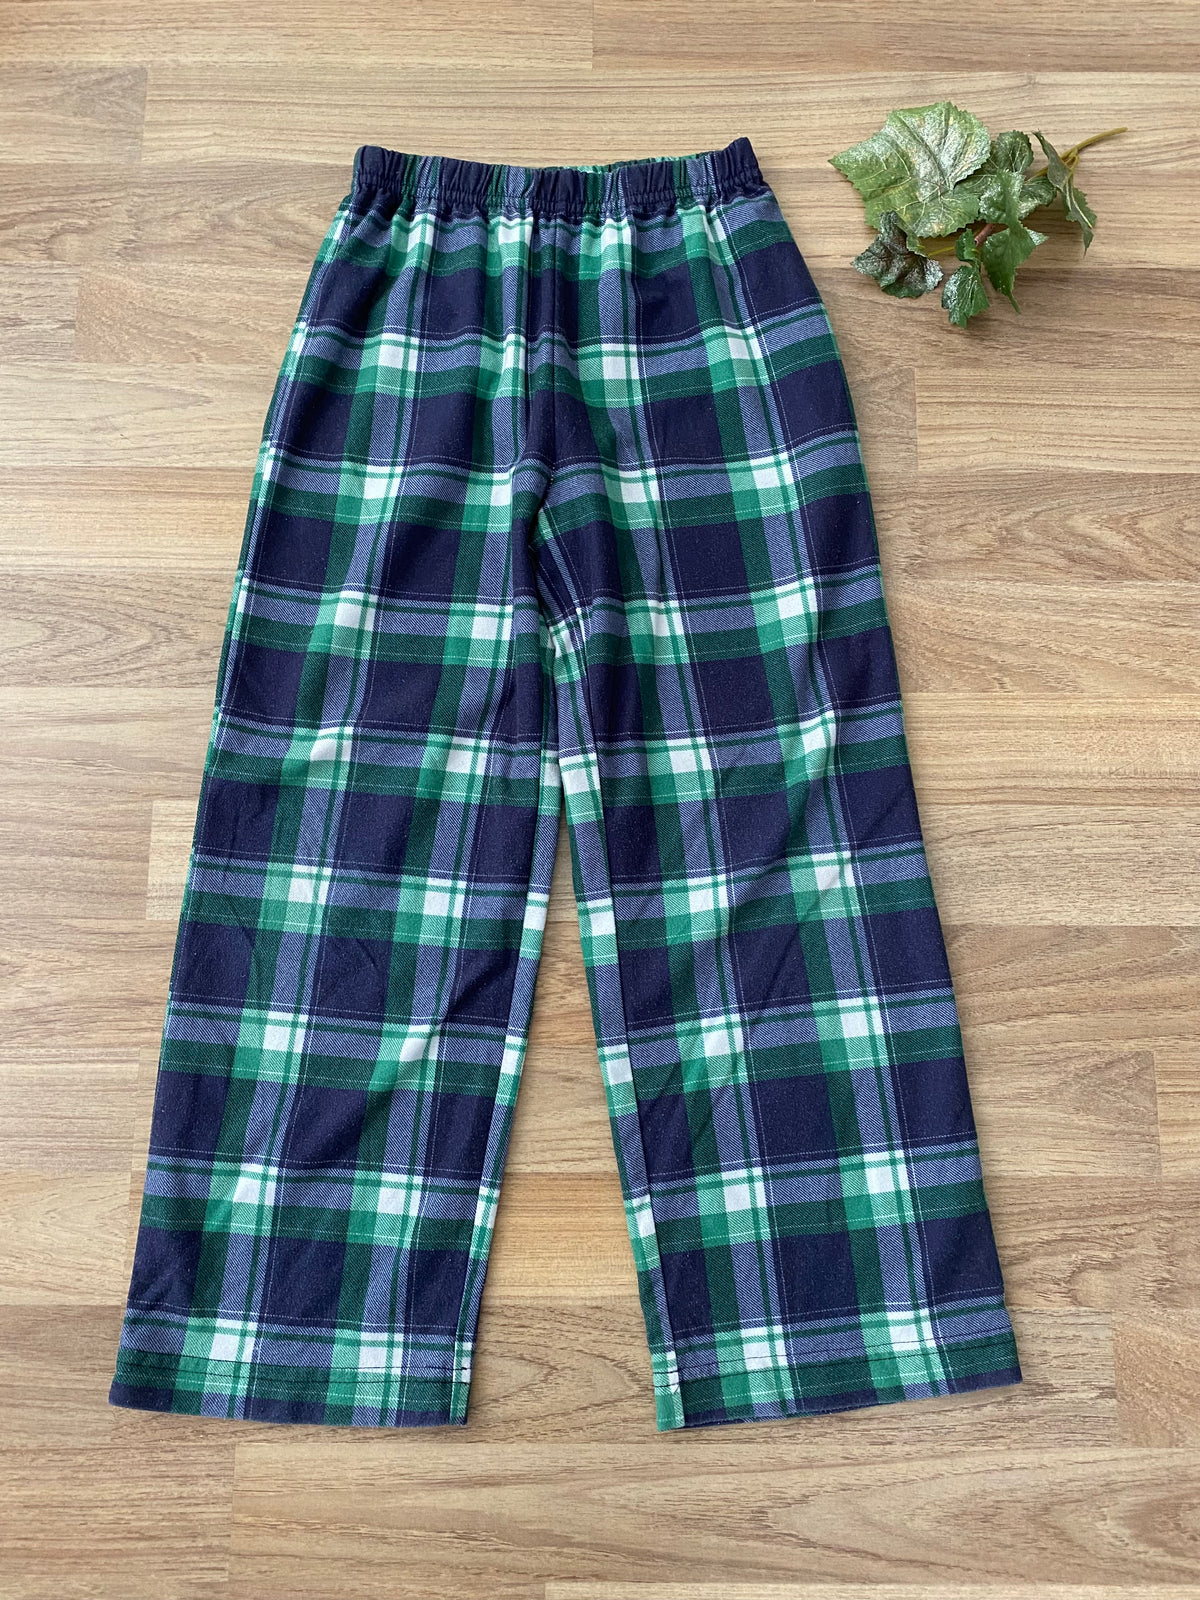 Pajama Pants (Girls Size 6-6X)